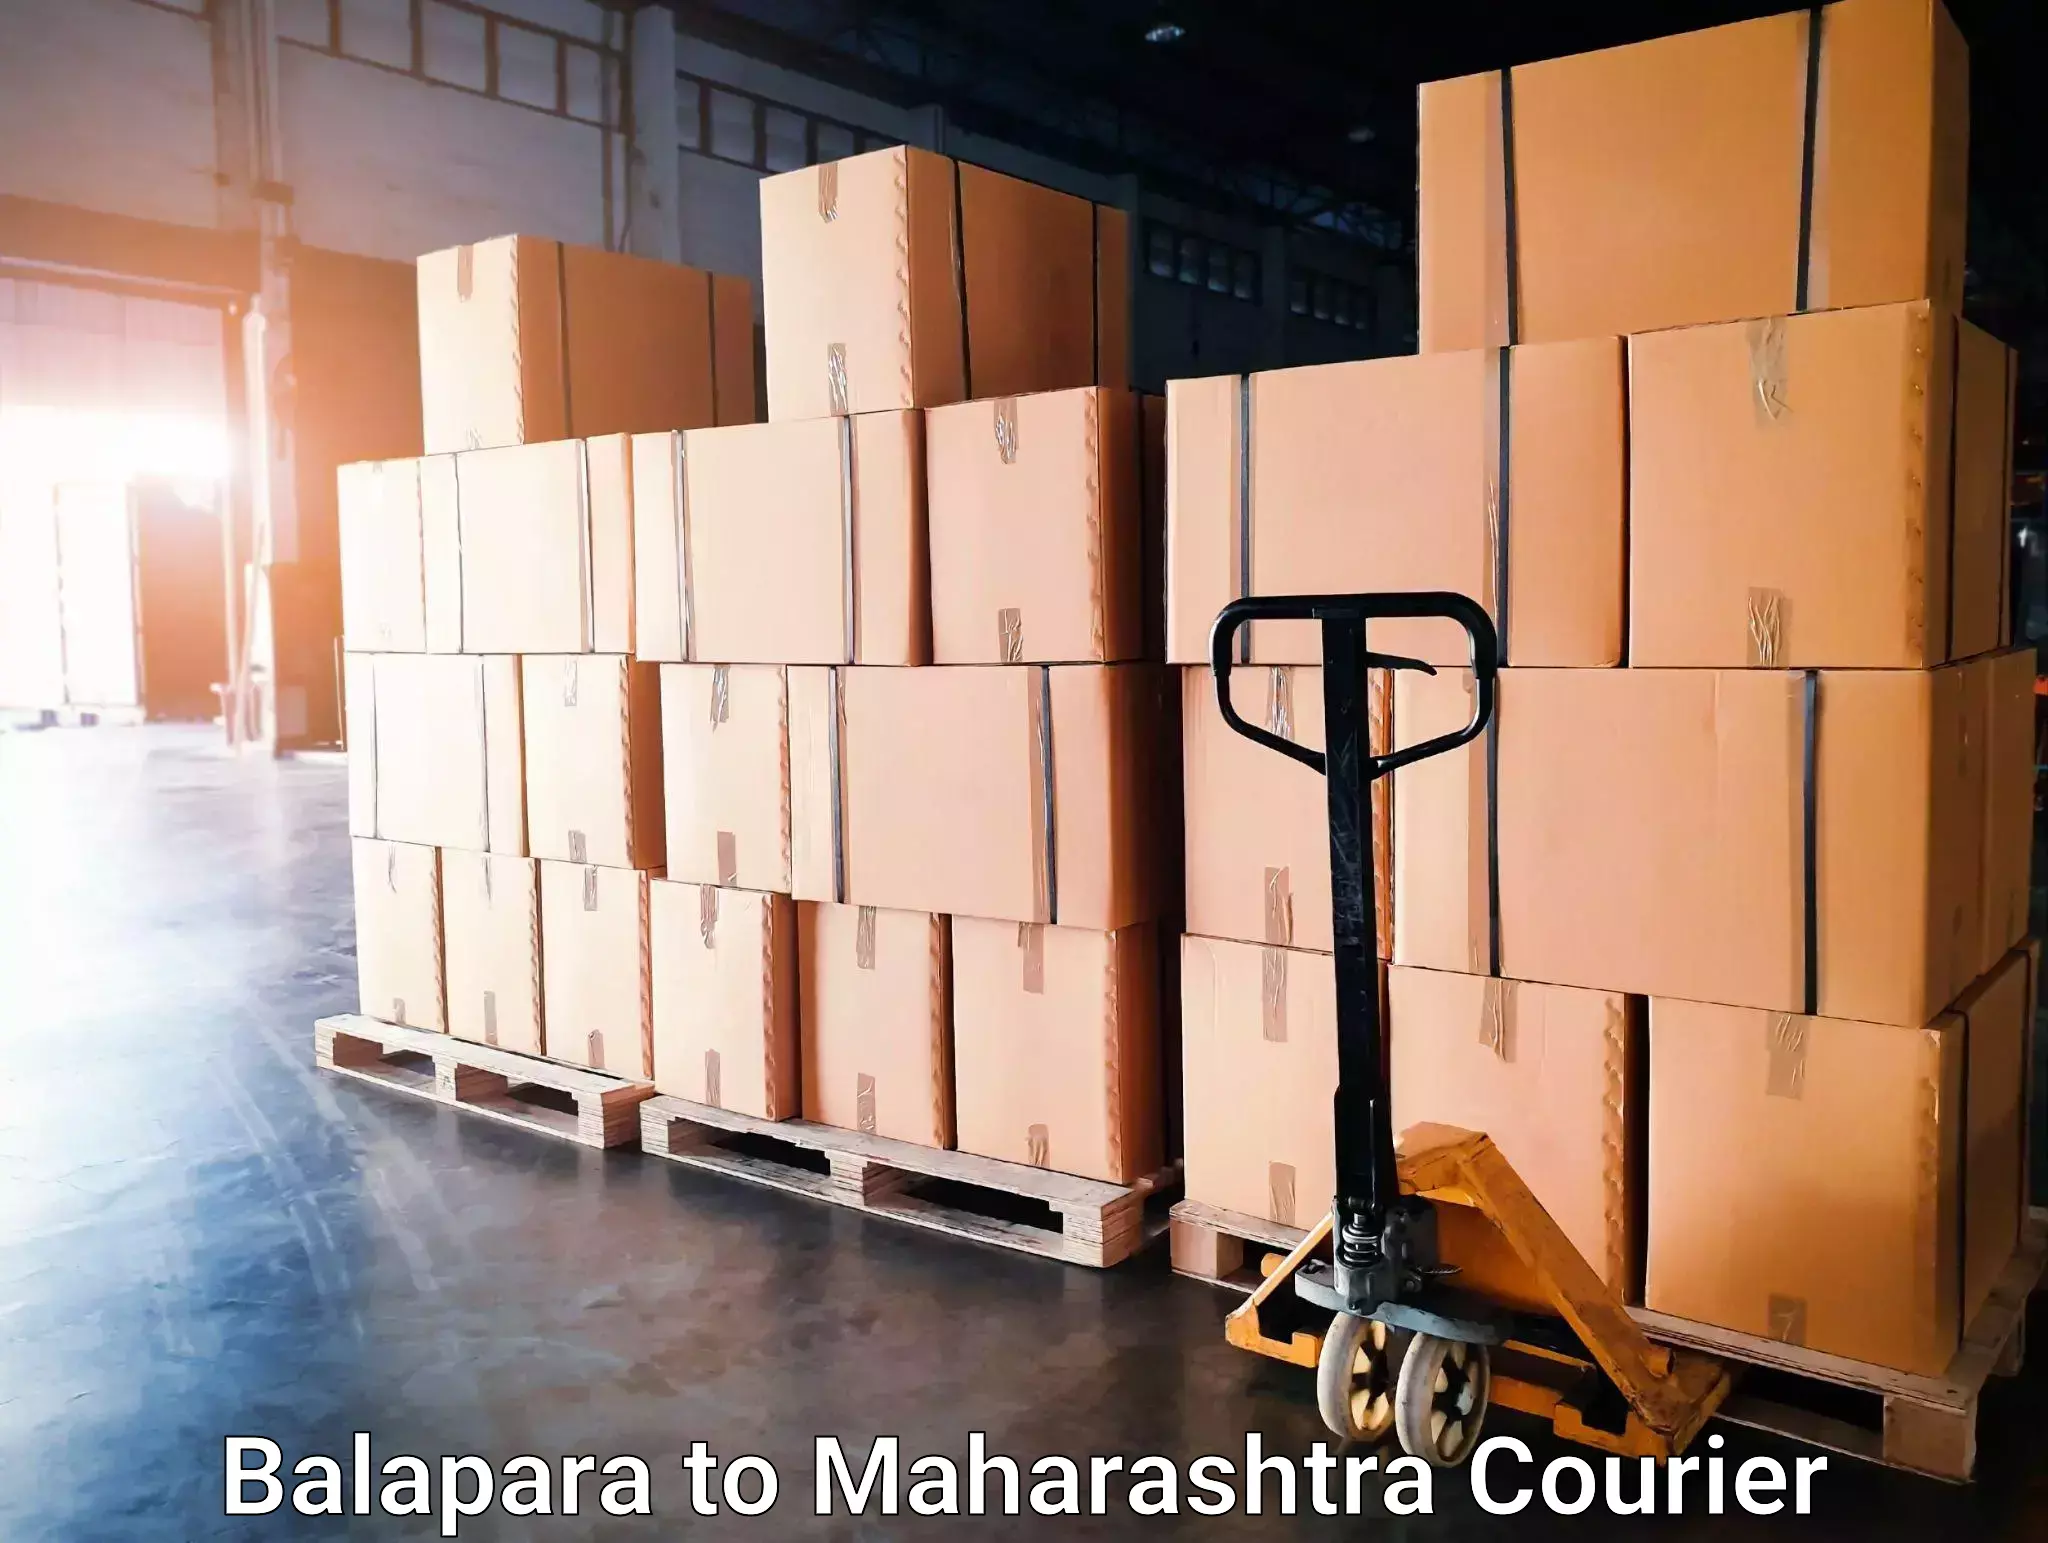 Next-day delivery options Balapara to Mahabaleshwar